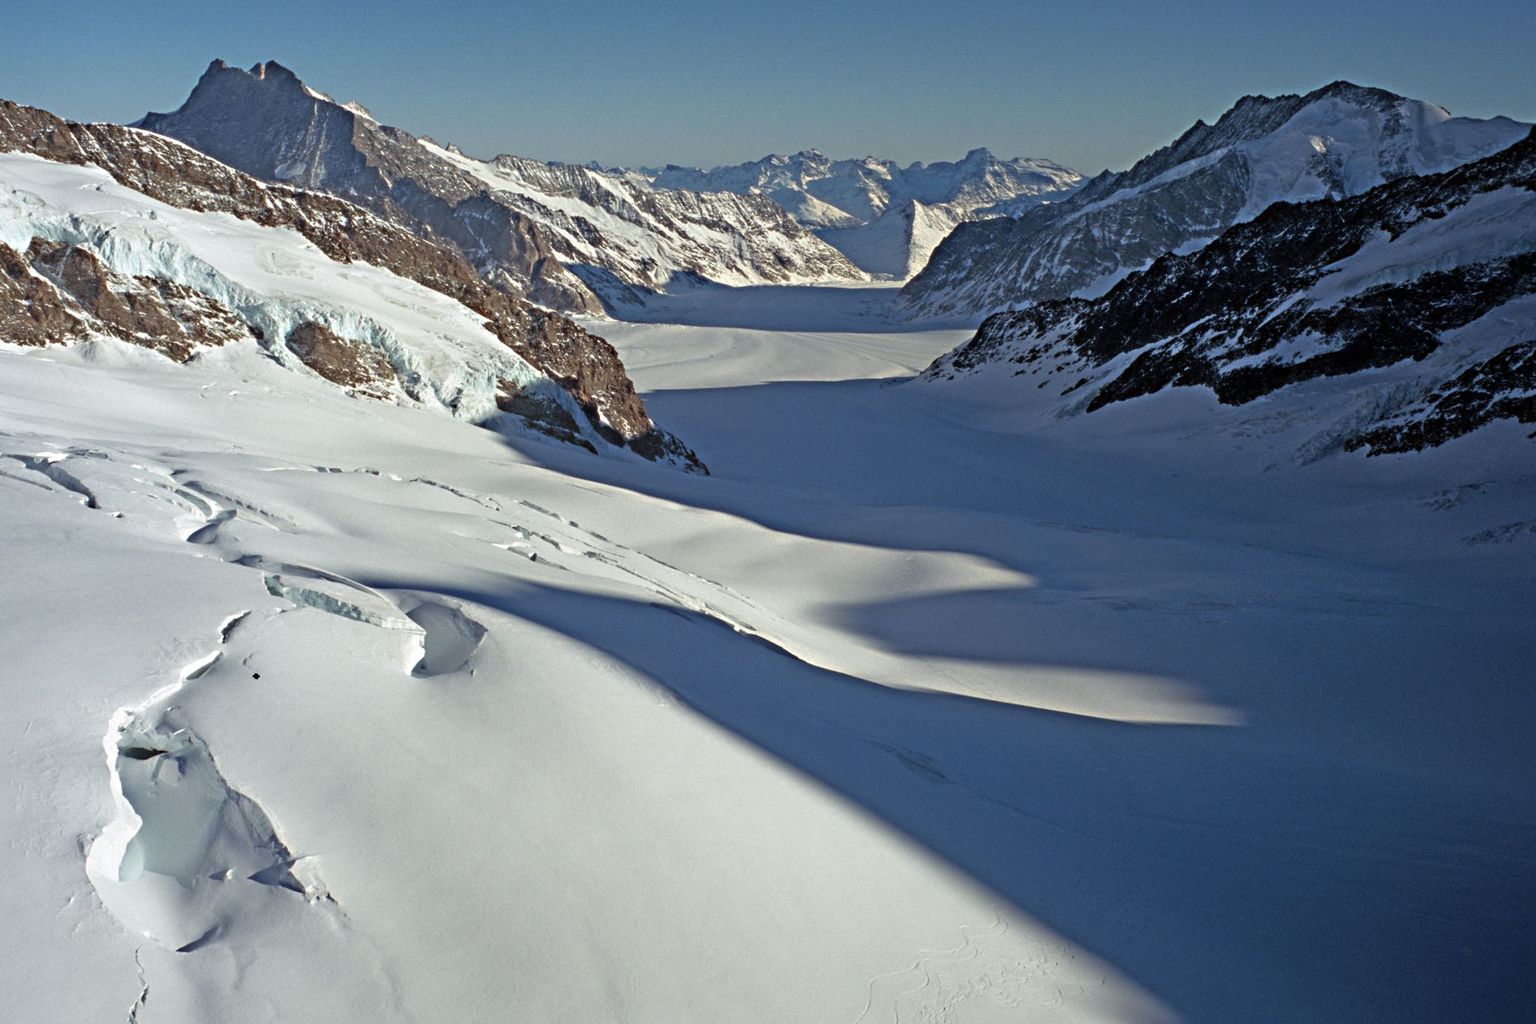 ghiacciaio uccello neve montagna alpi